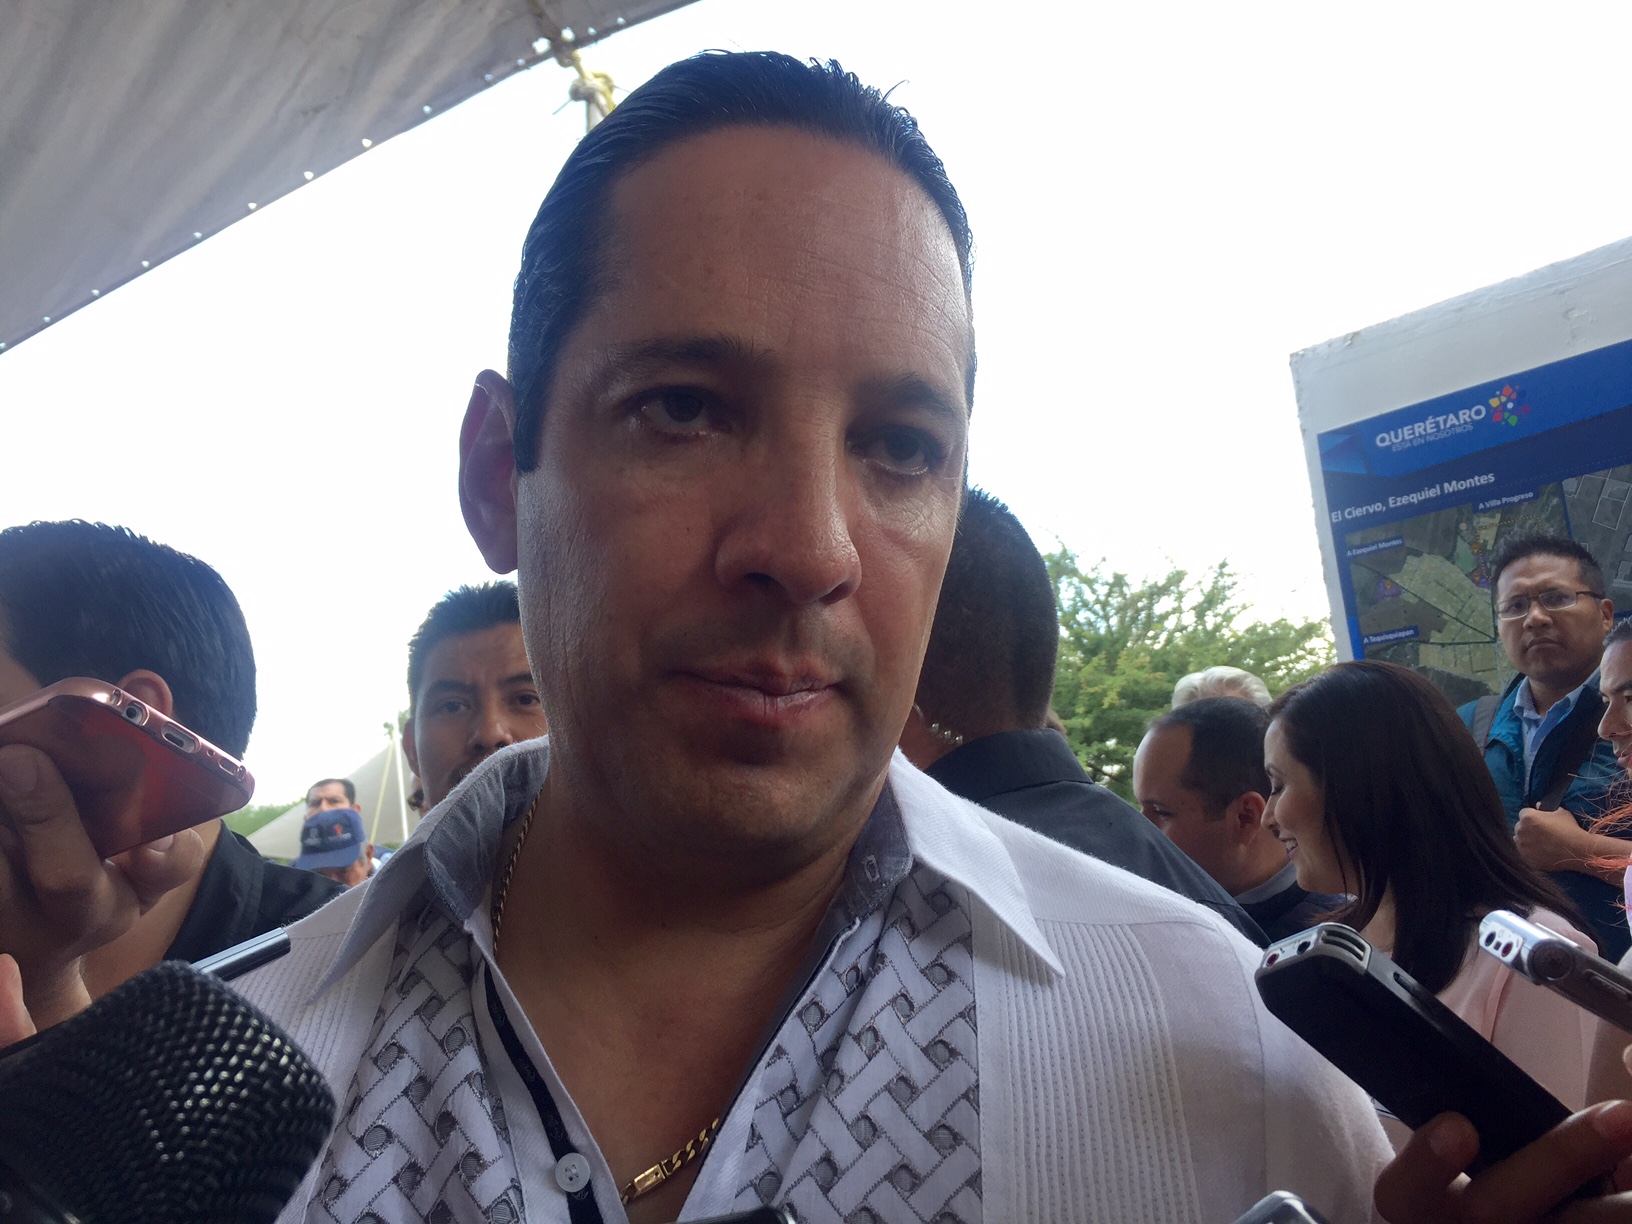  Ley de protección a periodistas requiere consulta con actores involucrados: Pancho Domínguez